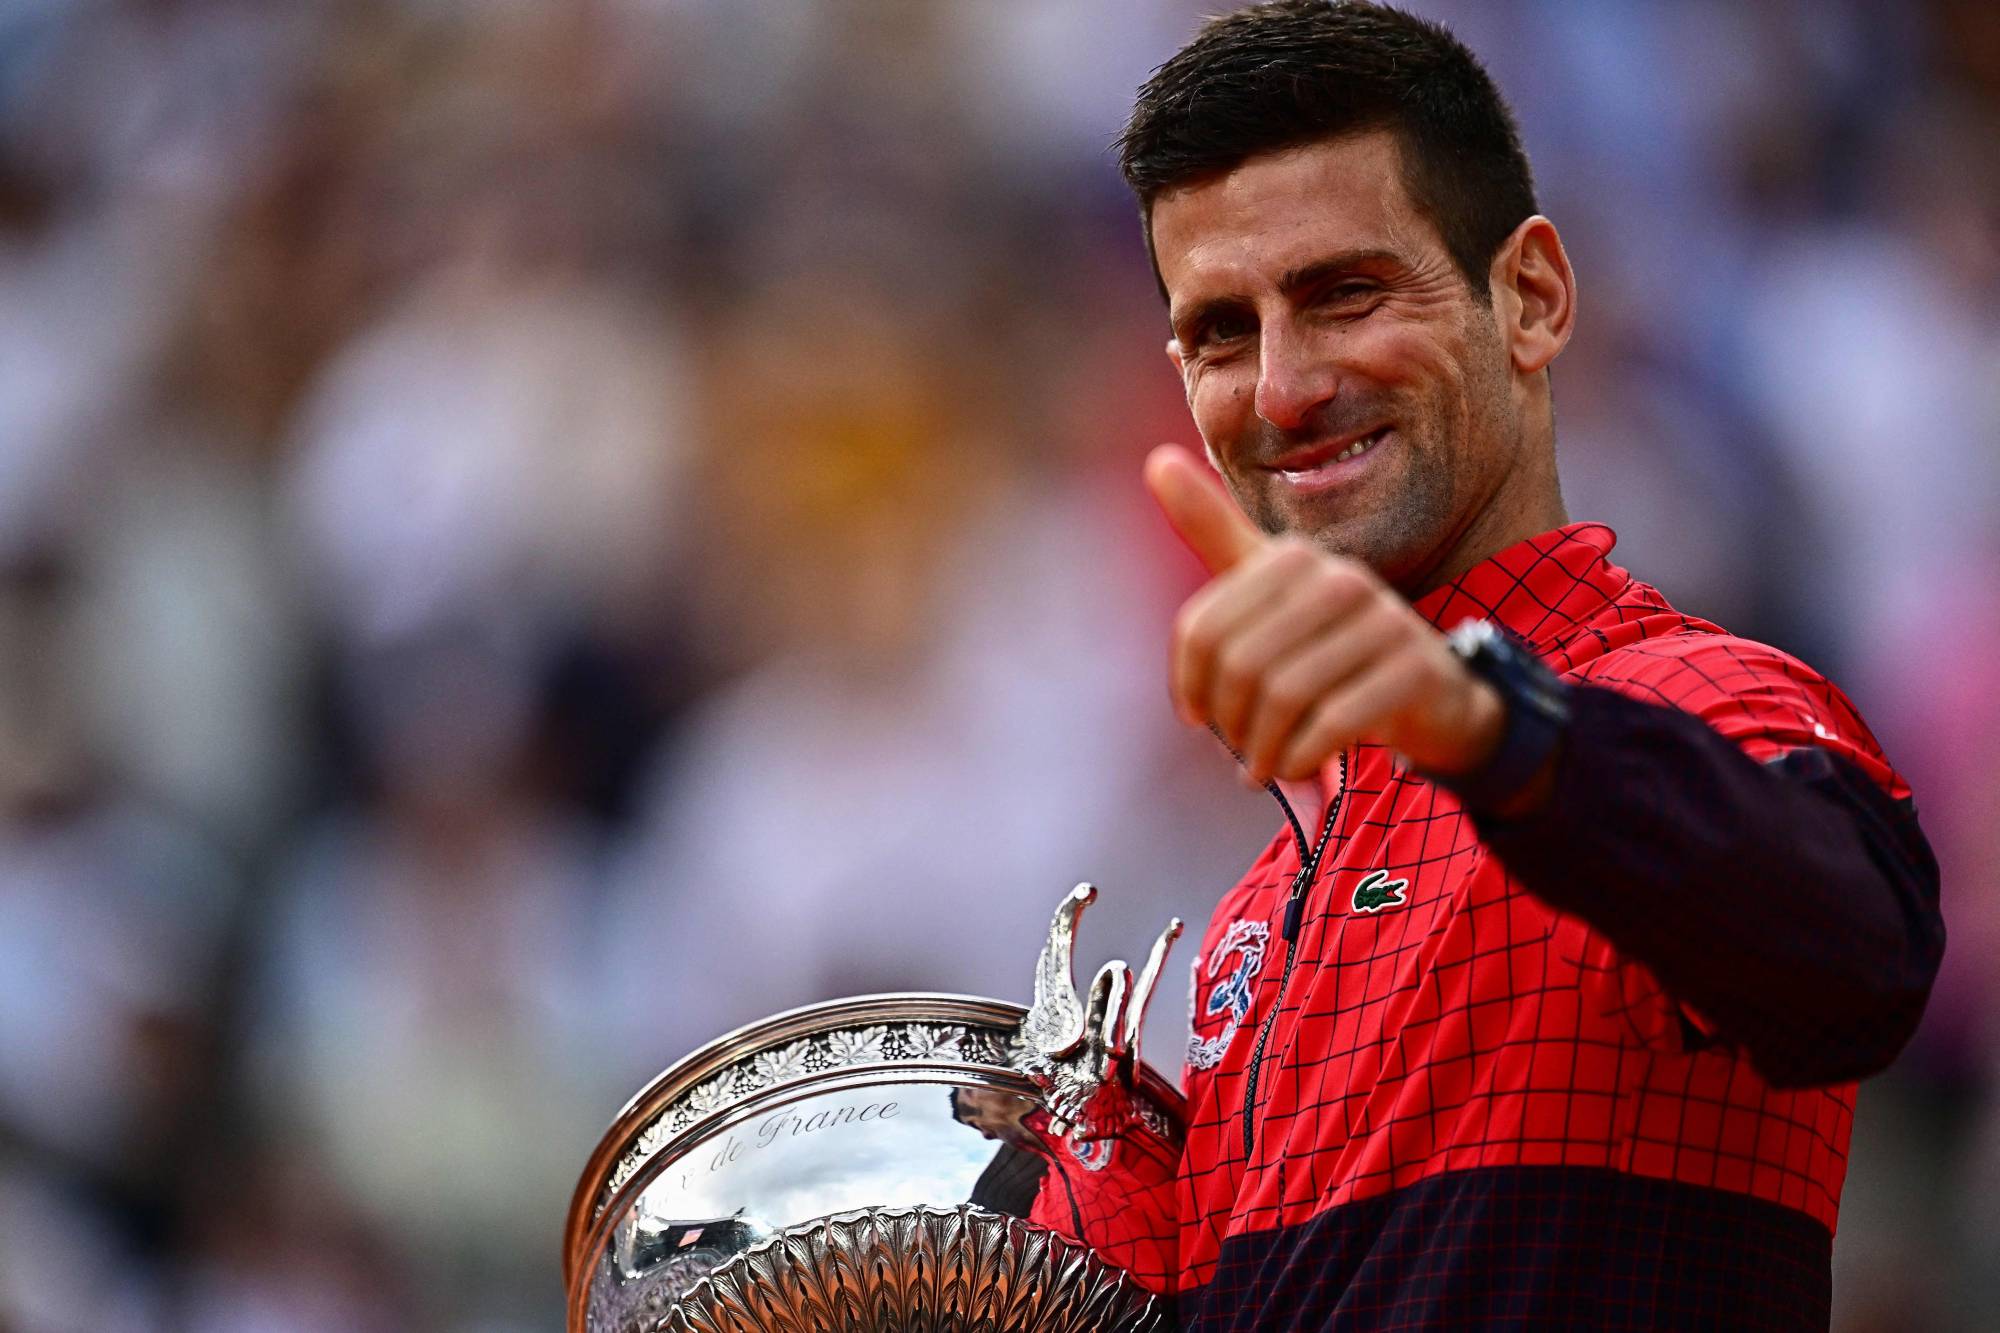 Novak Djokovic reclaims No